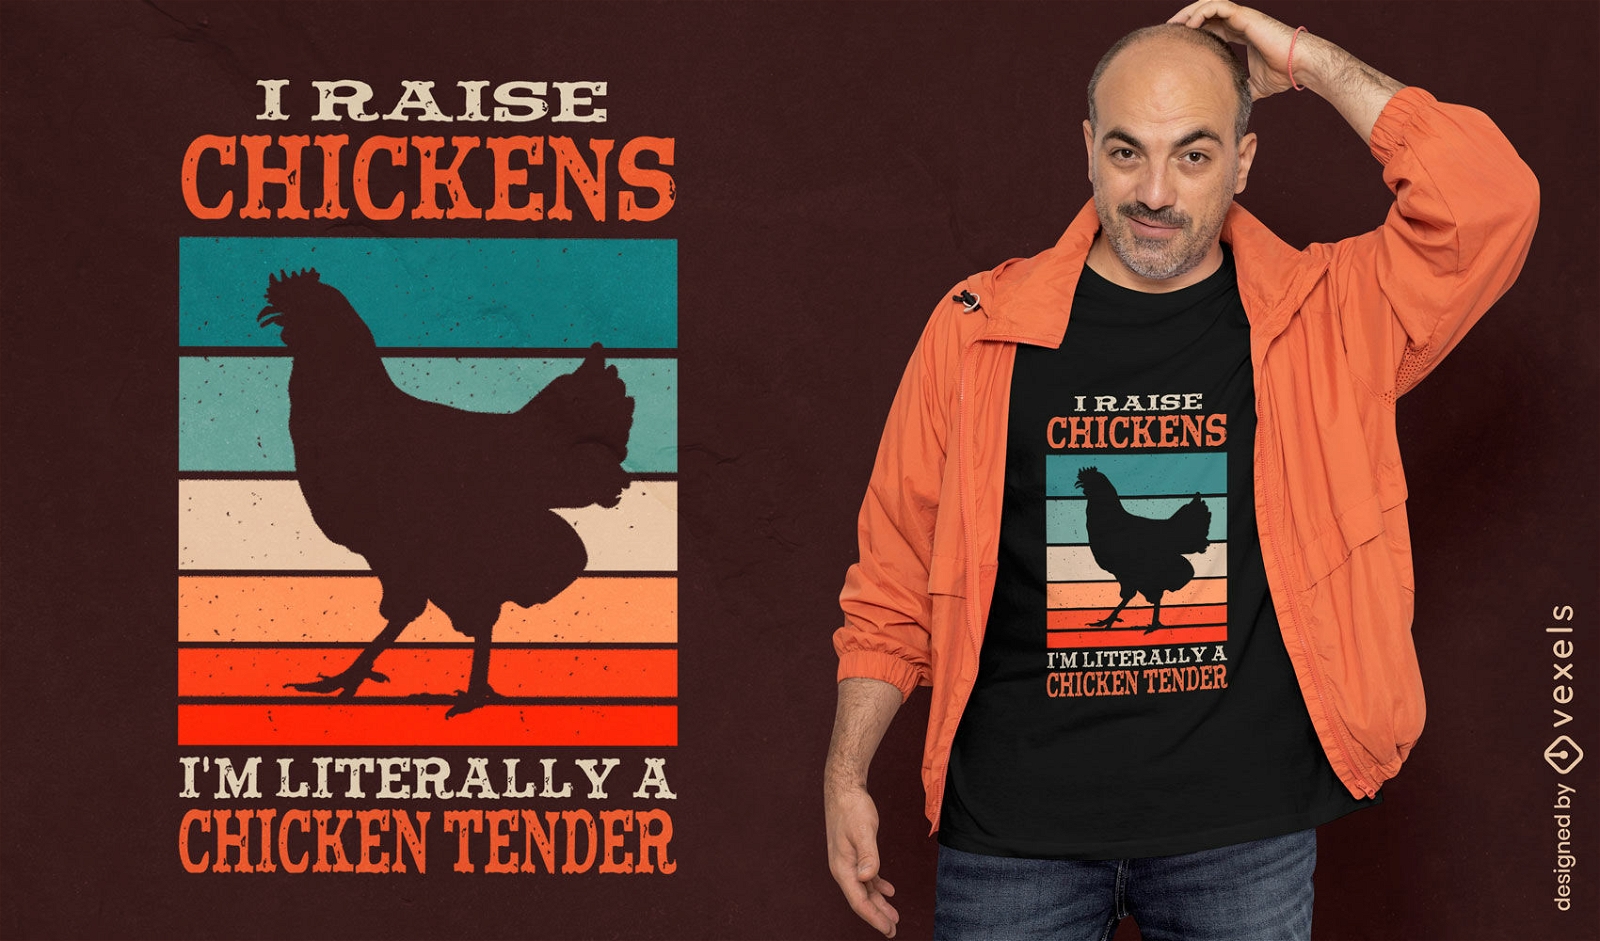 Chicken tender humor t-shirt design